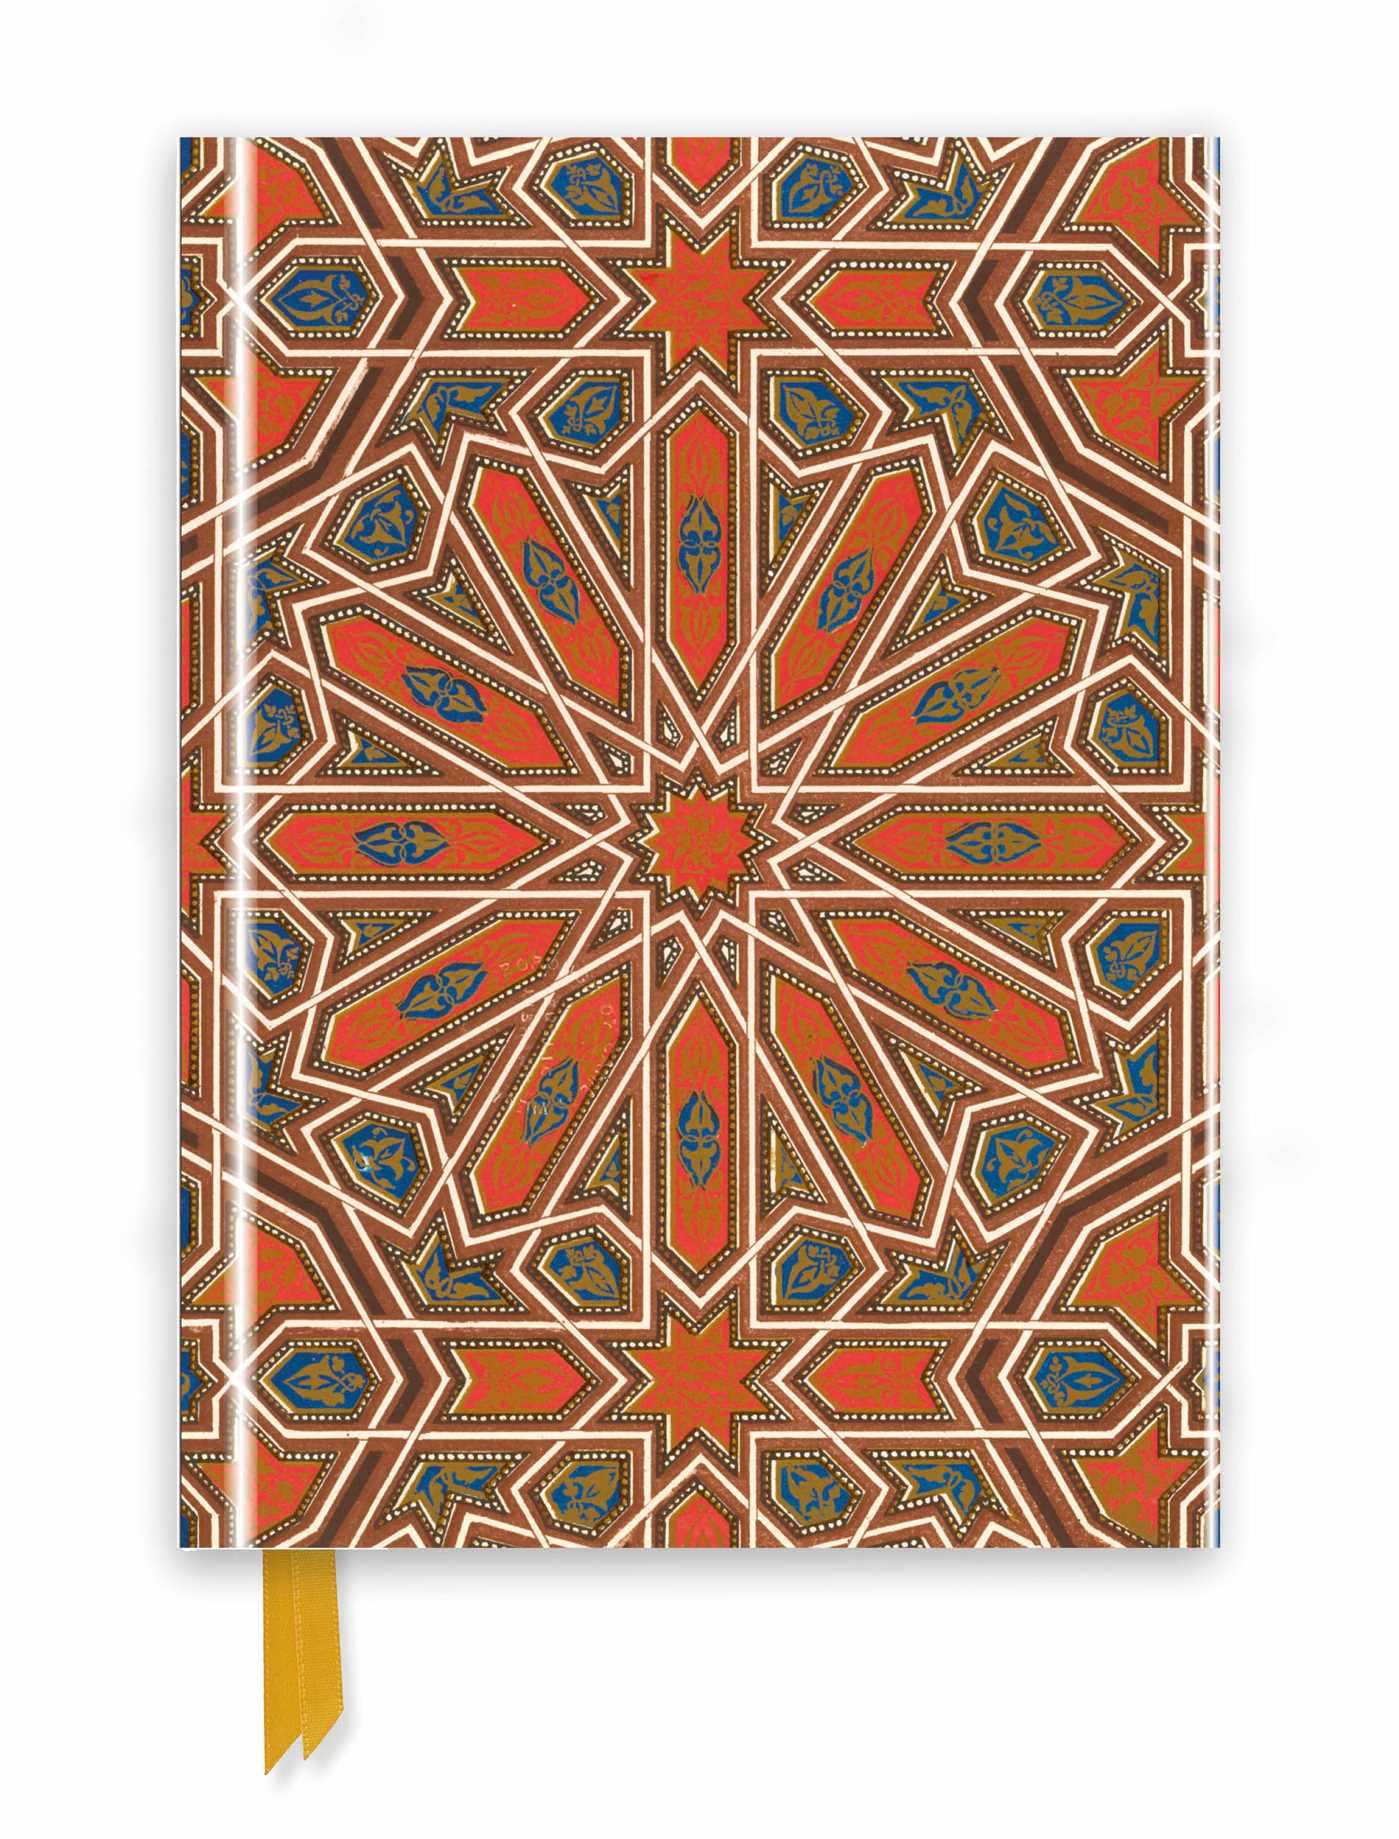 Owen Jones: Alhambra Ceiling Journal